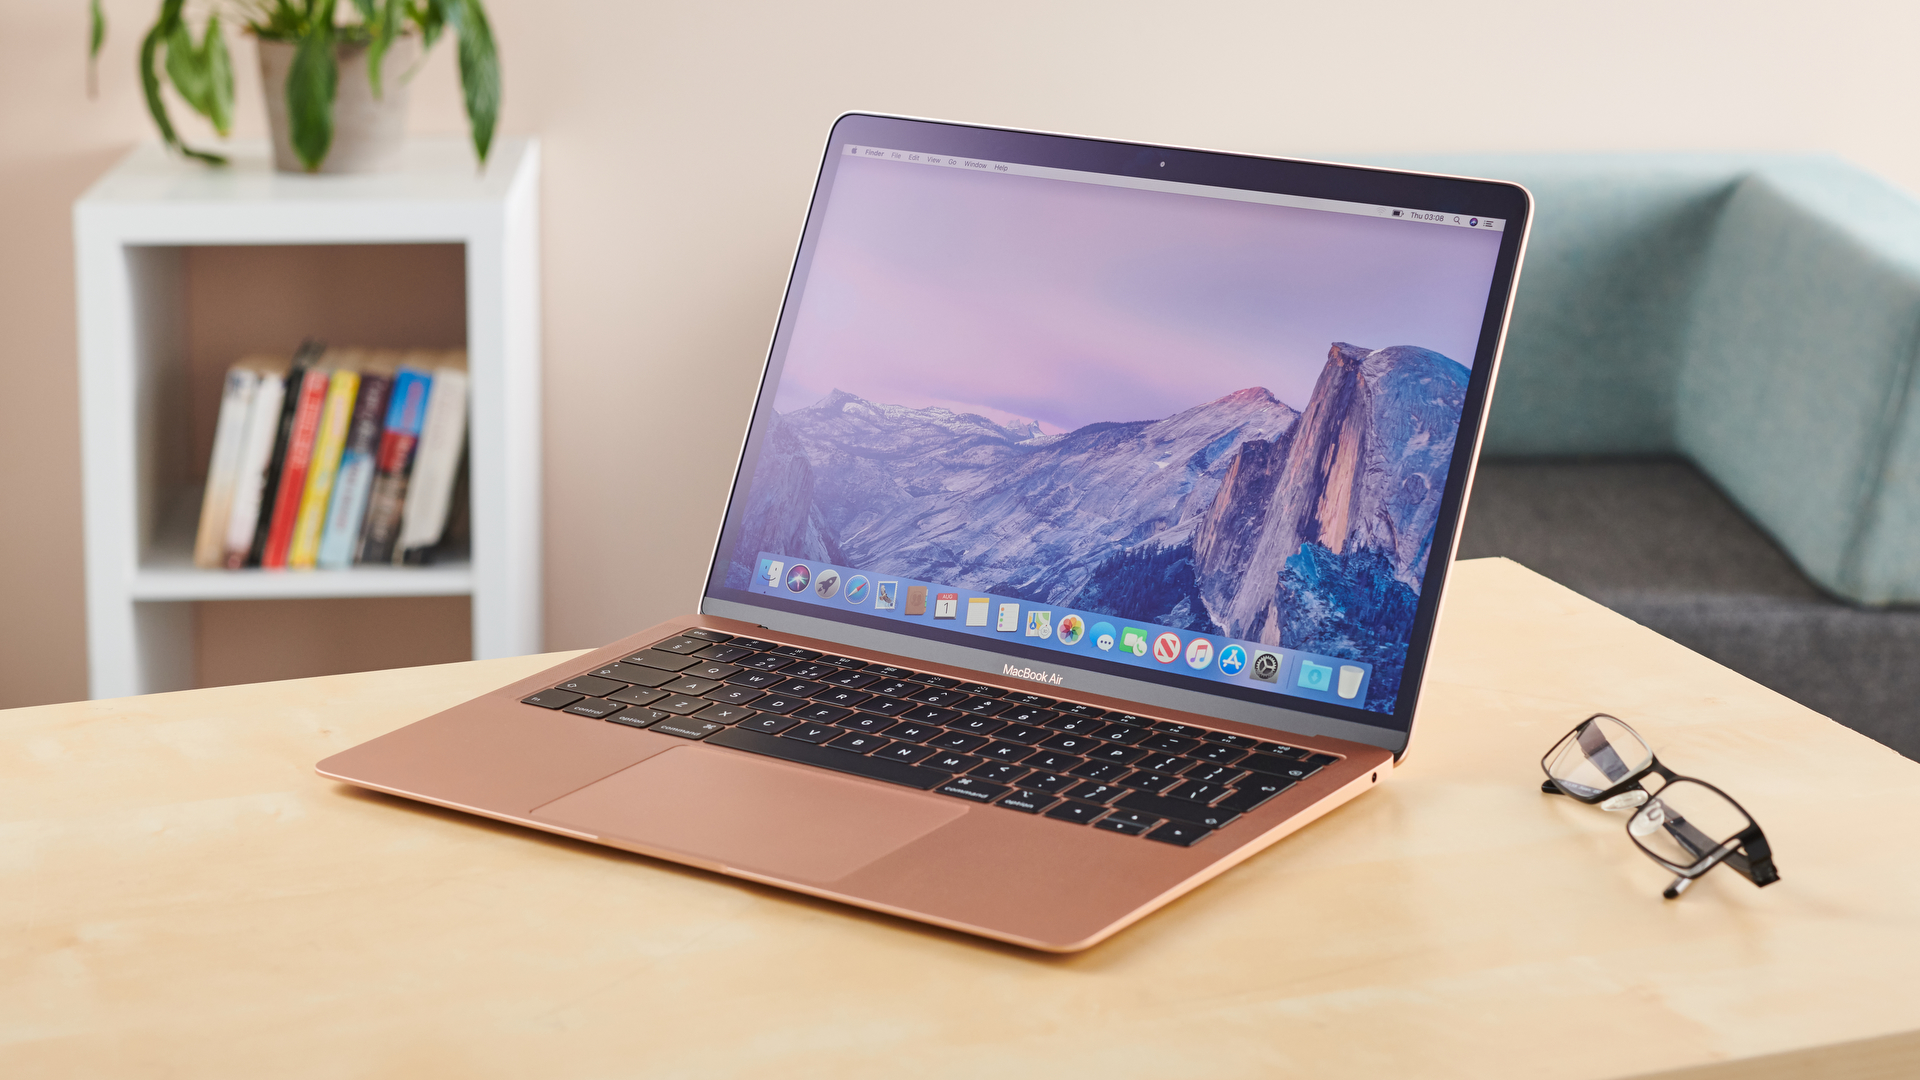 MacBook Air 2019 مقابل MacBook Pro 2019 ما هو الأفضل بالنسبة لك؟